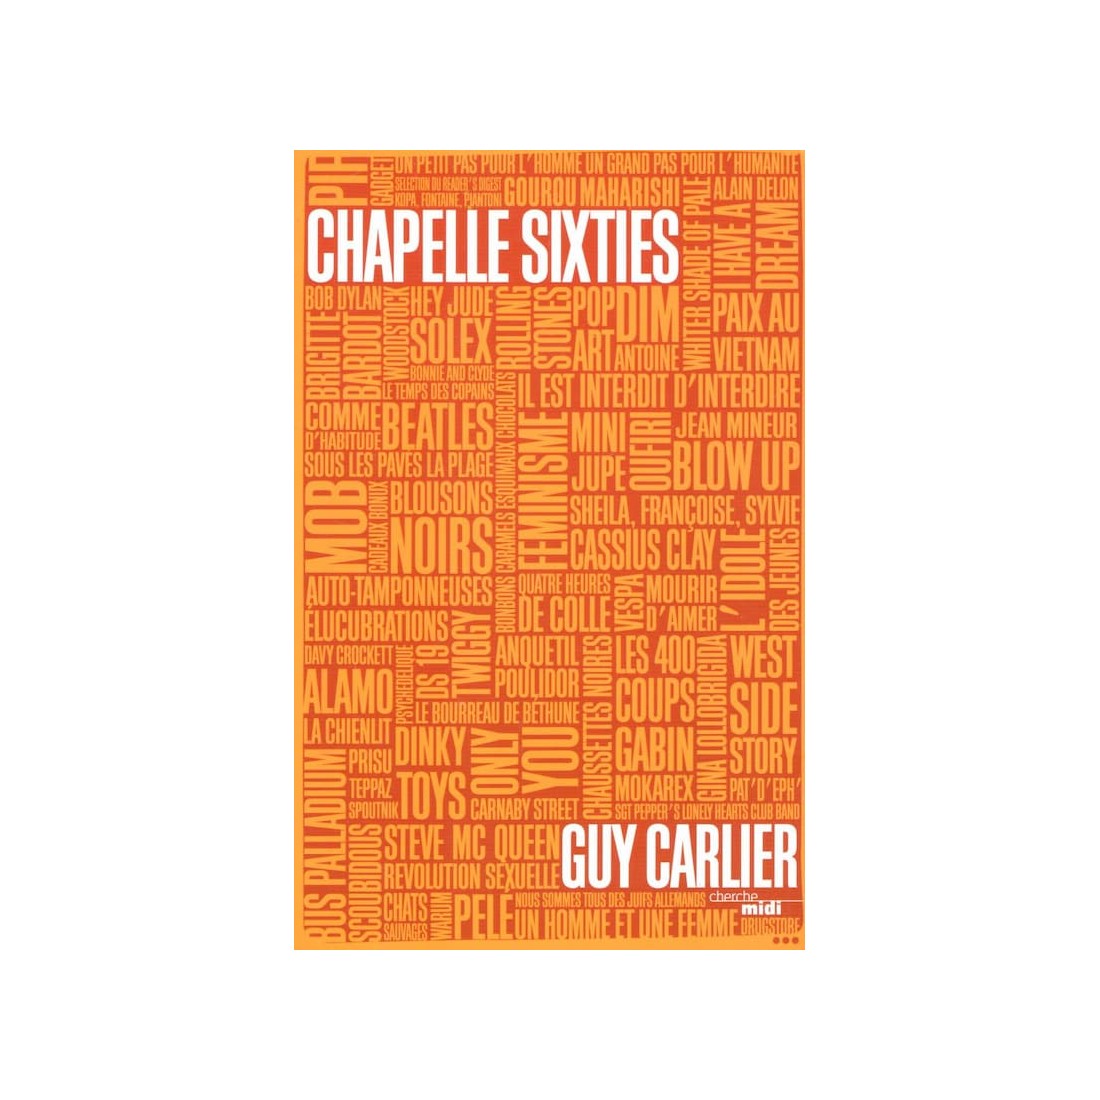 Chapelle sixties - Roman de Guy Carlier - Ocazlivres.com